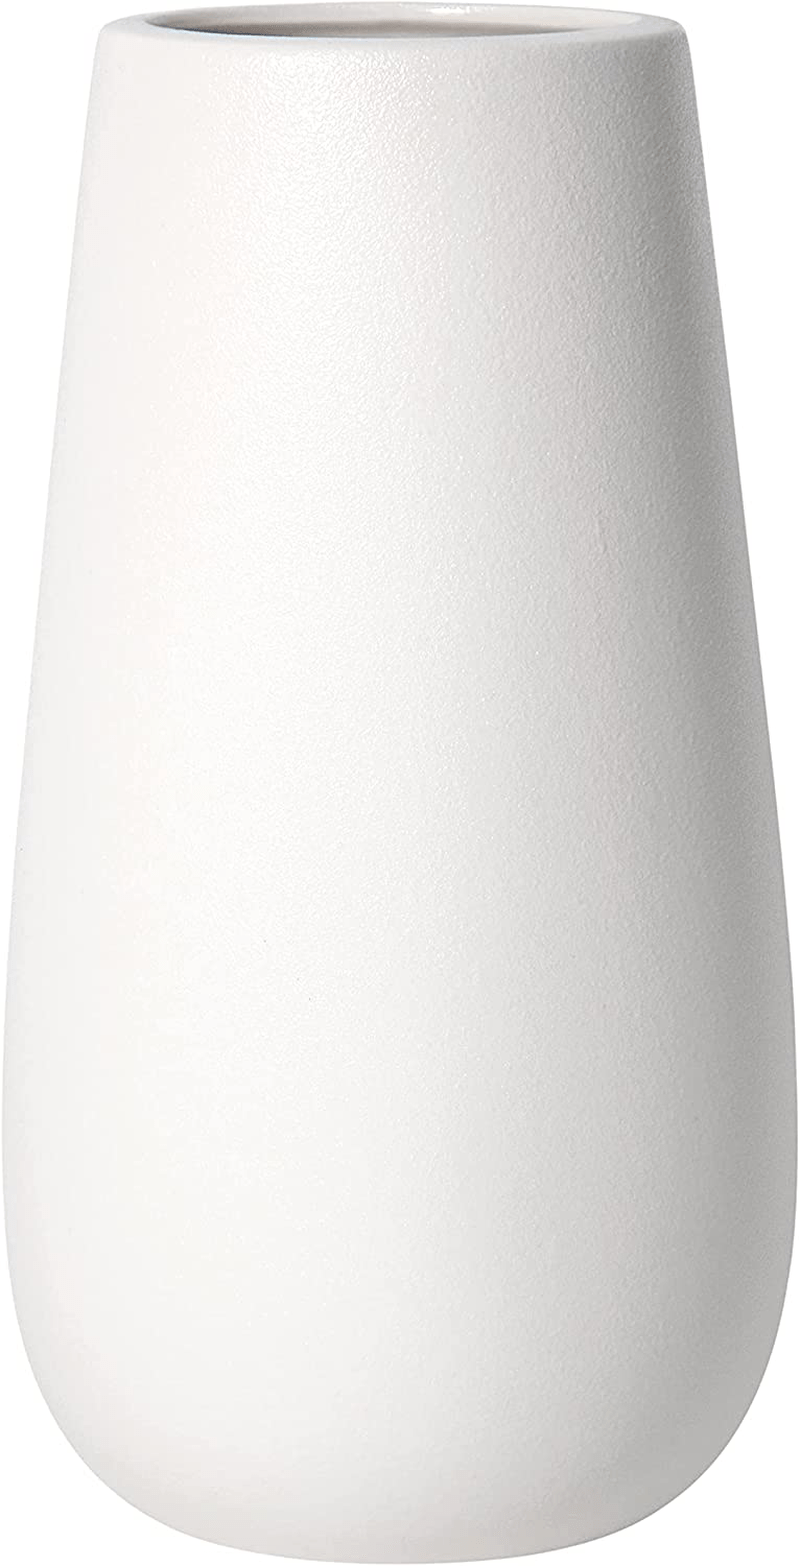 D'vine Dev 10 Inch Elegant Oval Ceramic Vase for Flowers, Home Décor Vase with Design Box, White, VS-OV-SW Home & Garden > Decor > Vases D'vine Dev White  